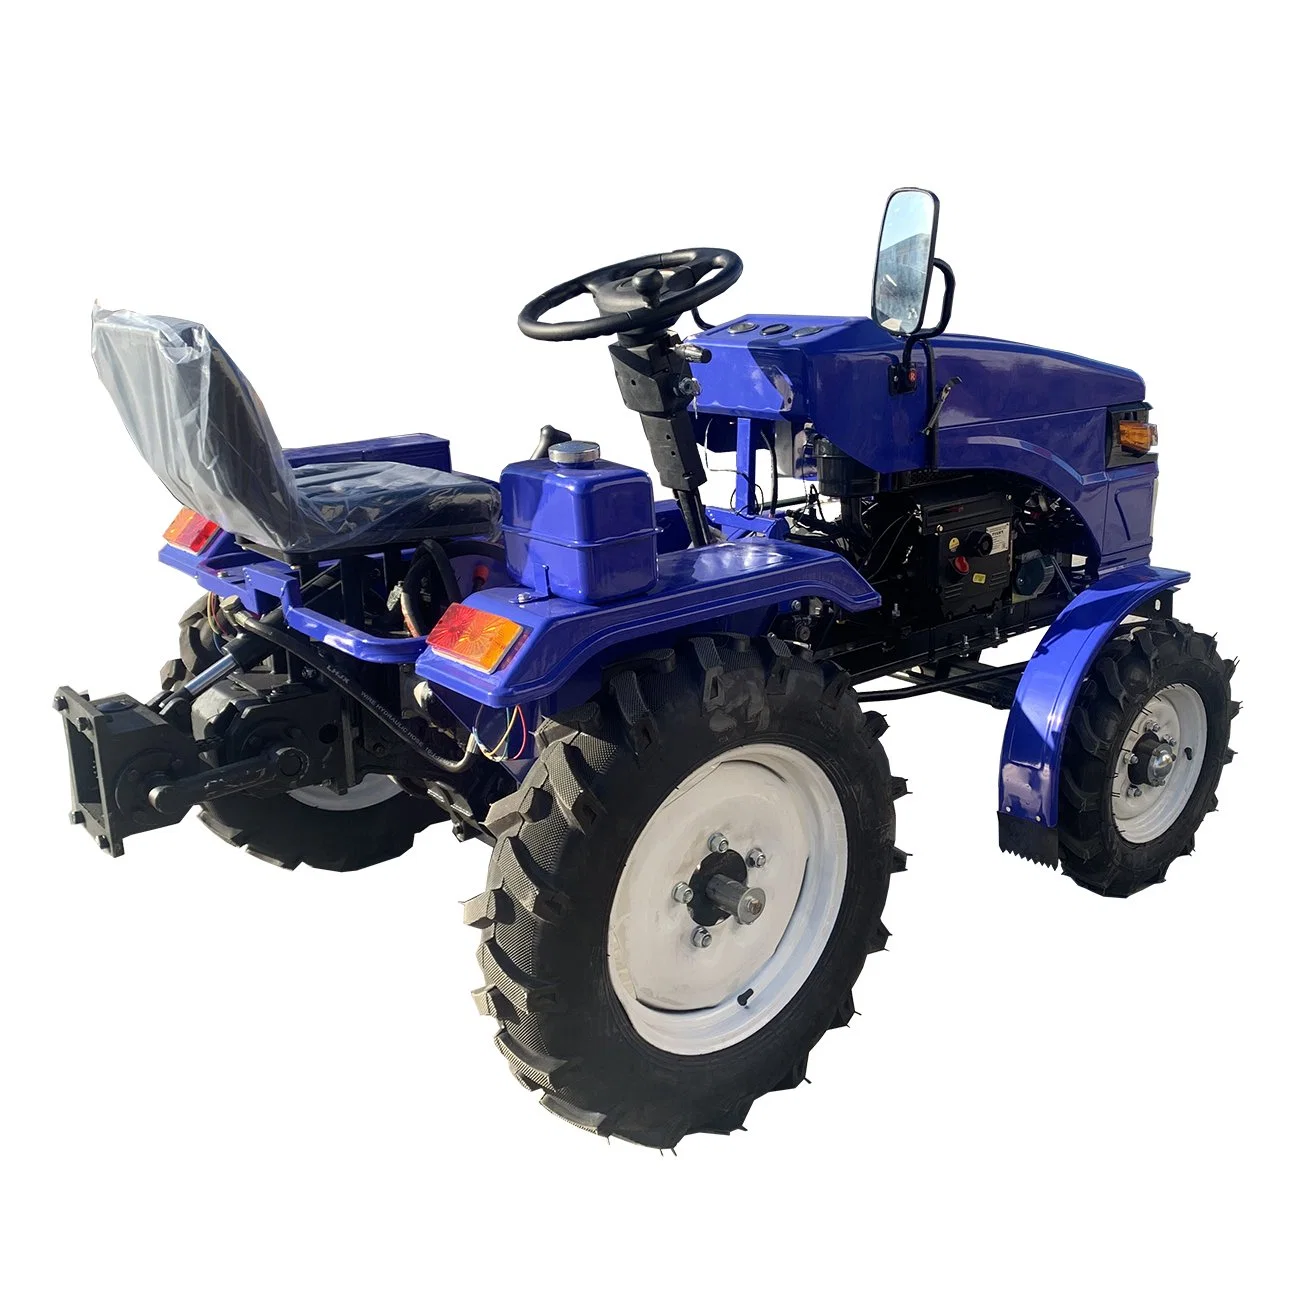 Hand Rotary Elektrische Power Tiller Preis Kompakte Mini-Traktor Bauernhof Walking Garten Landmaschinen Traktor mit Tiller